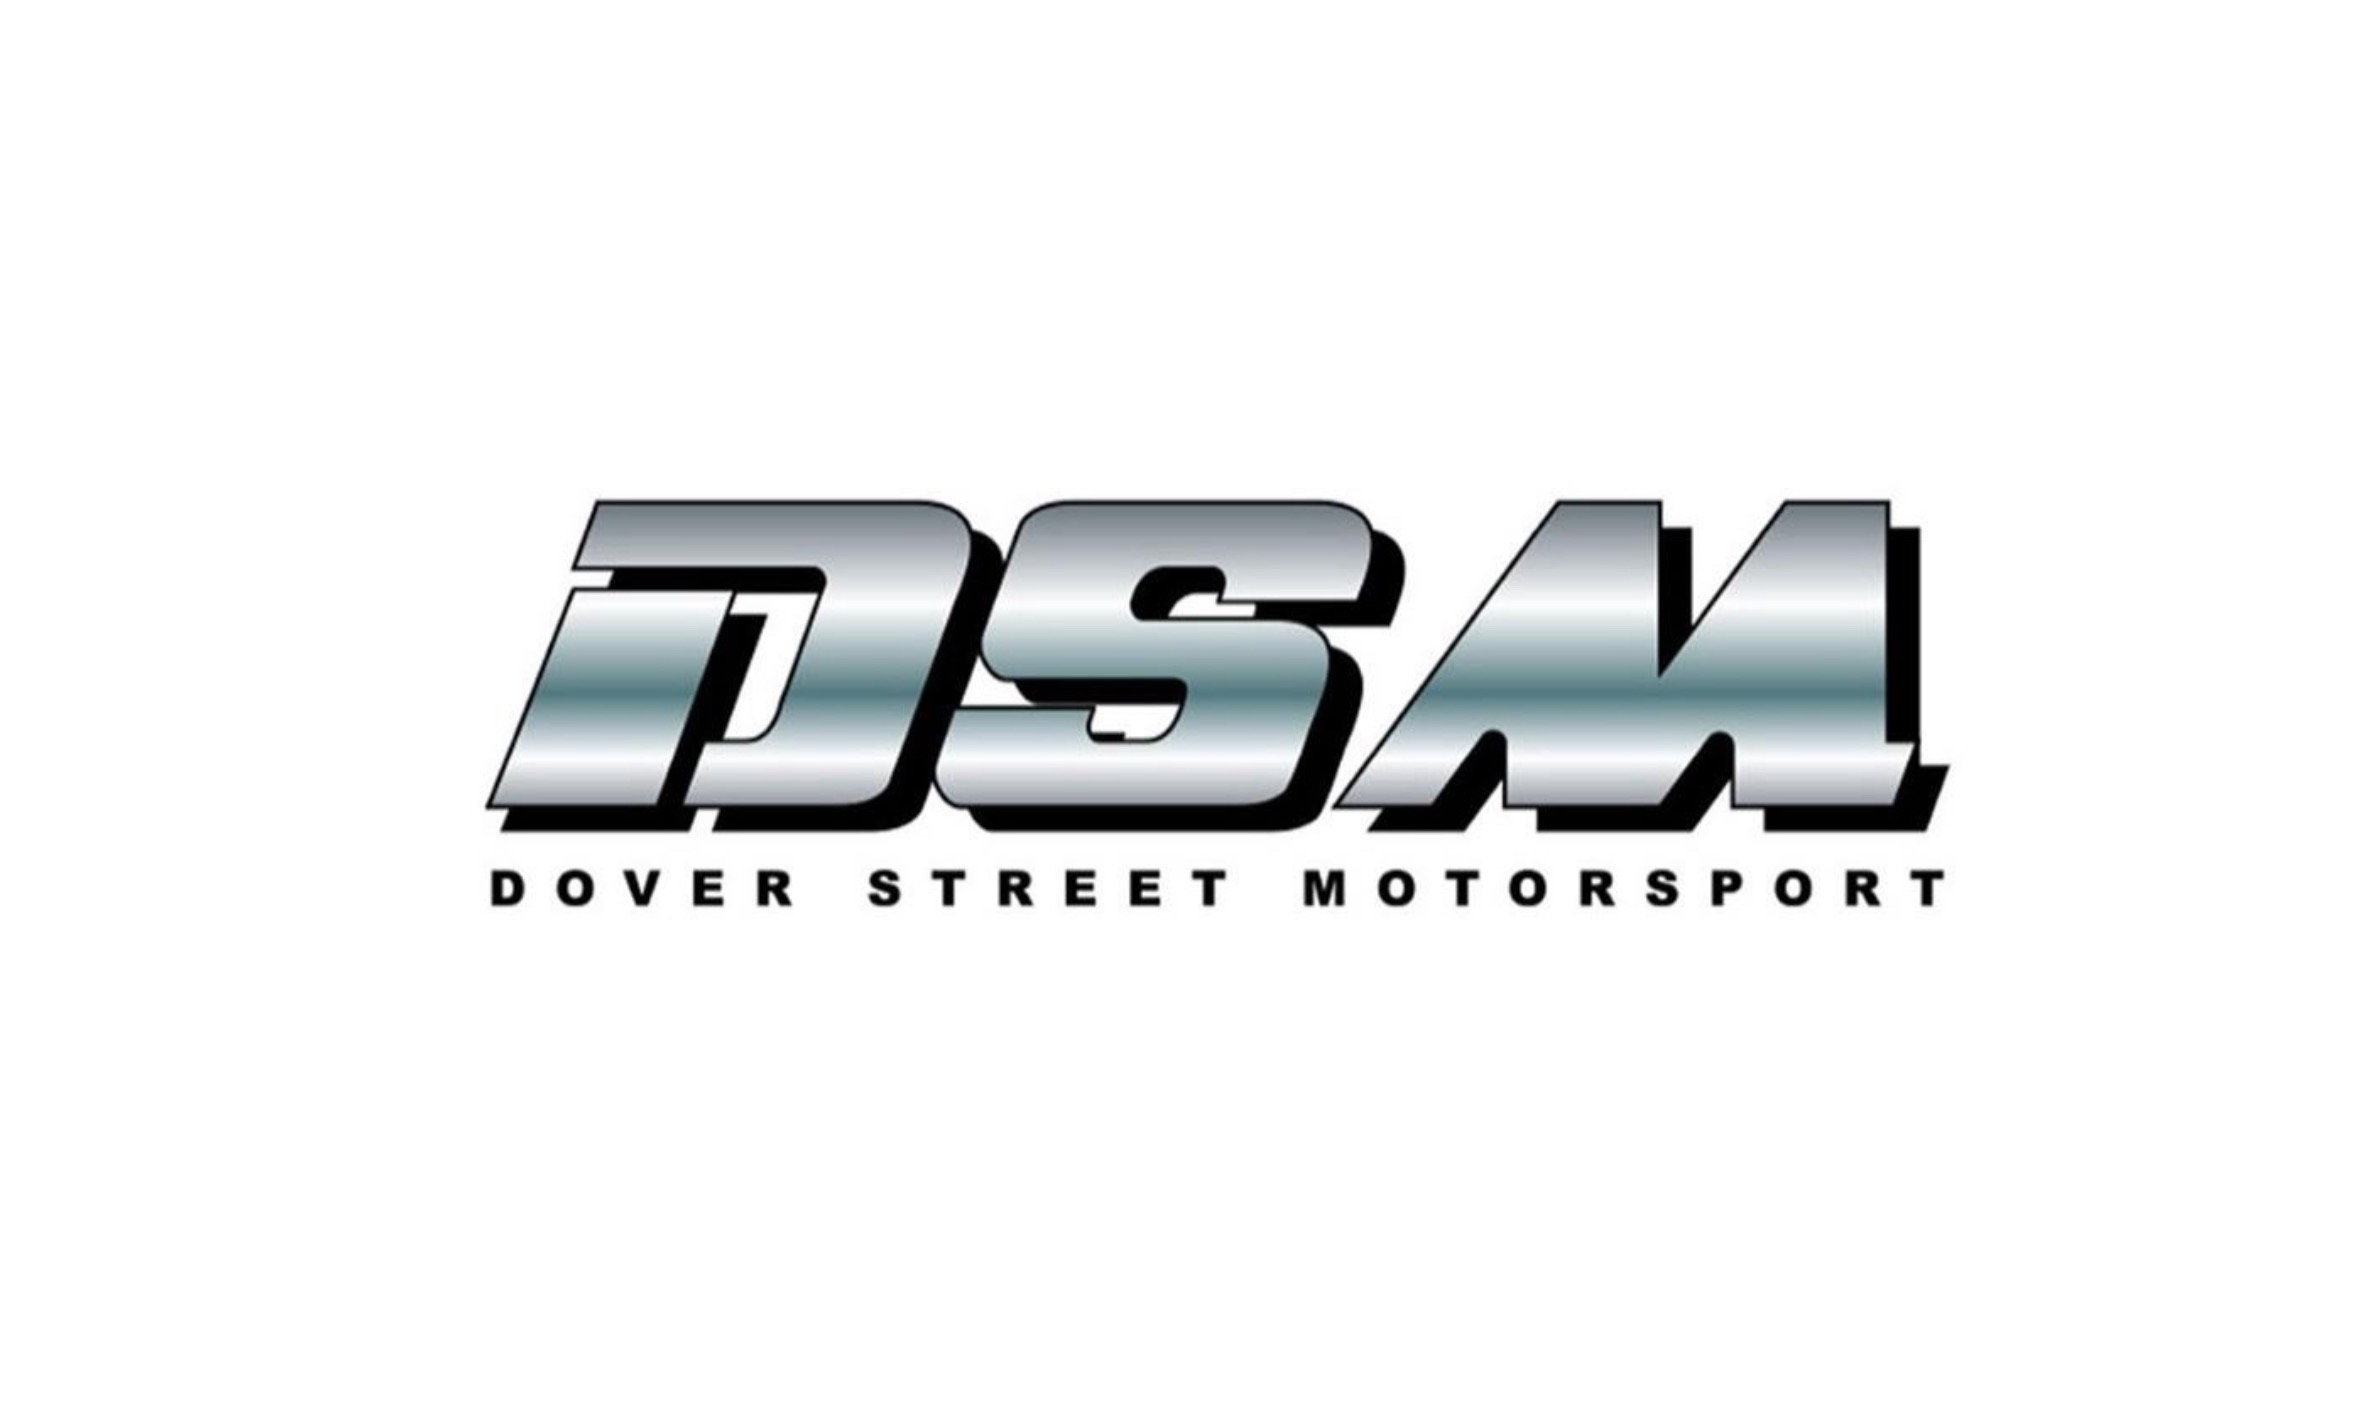 L’Art De L’Automobile 联合 Dover Street Market 打造 “Motorsport” 胶囊系列